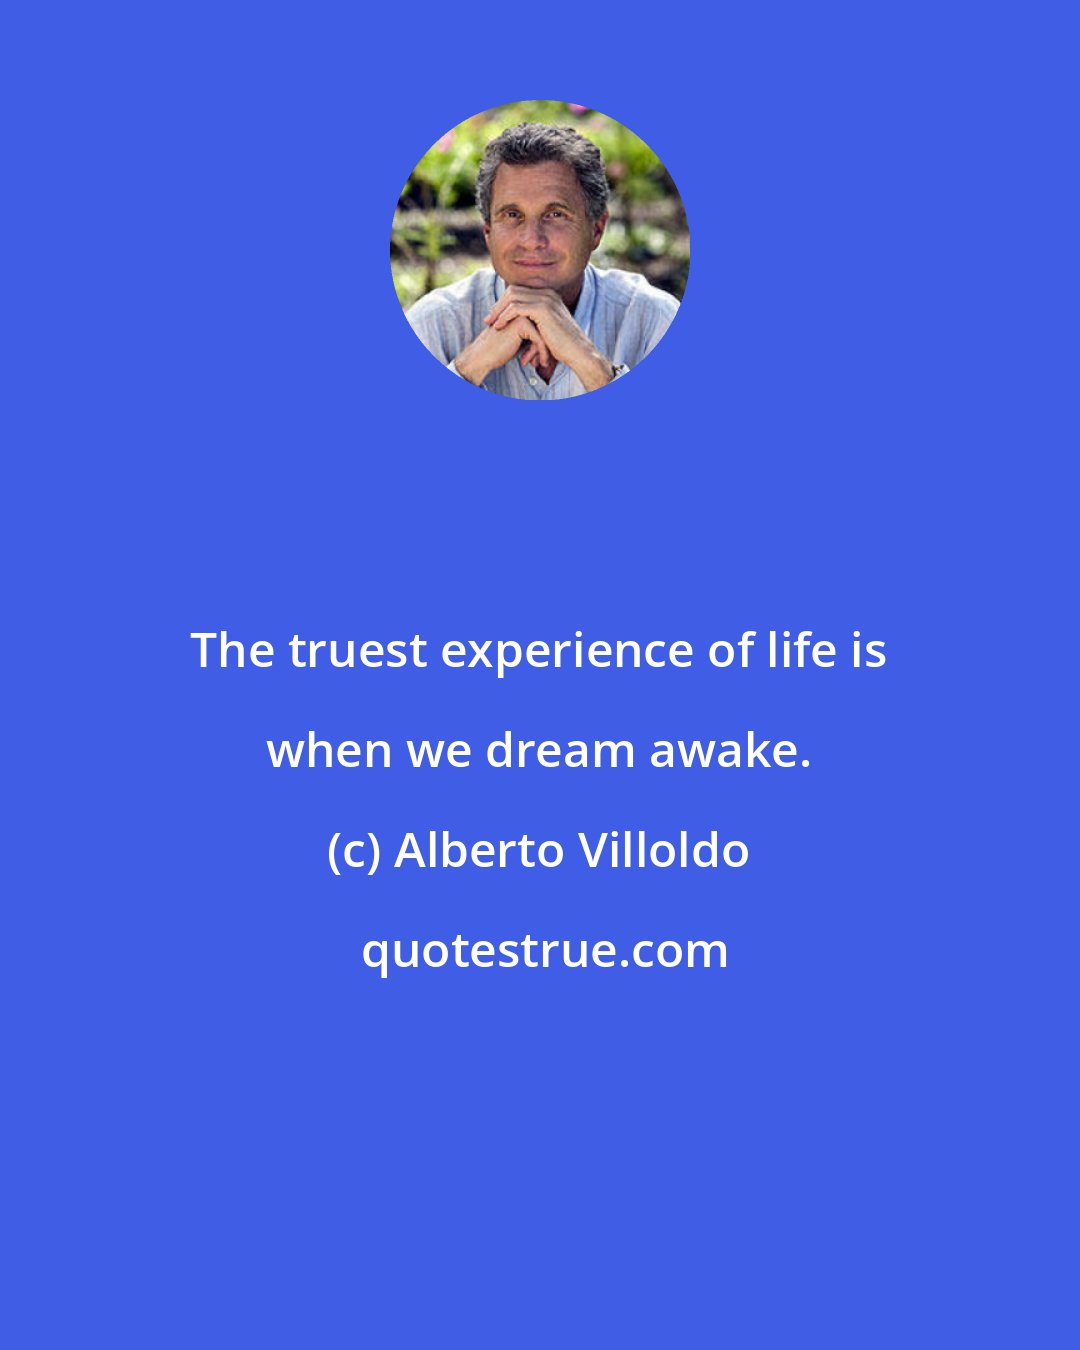 Alberto Villoldo: The truest experience of life is when we dream awake.